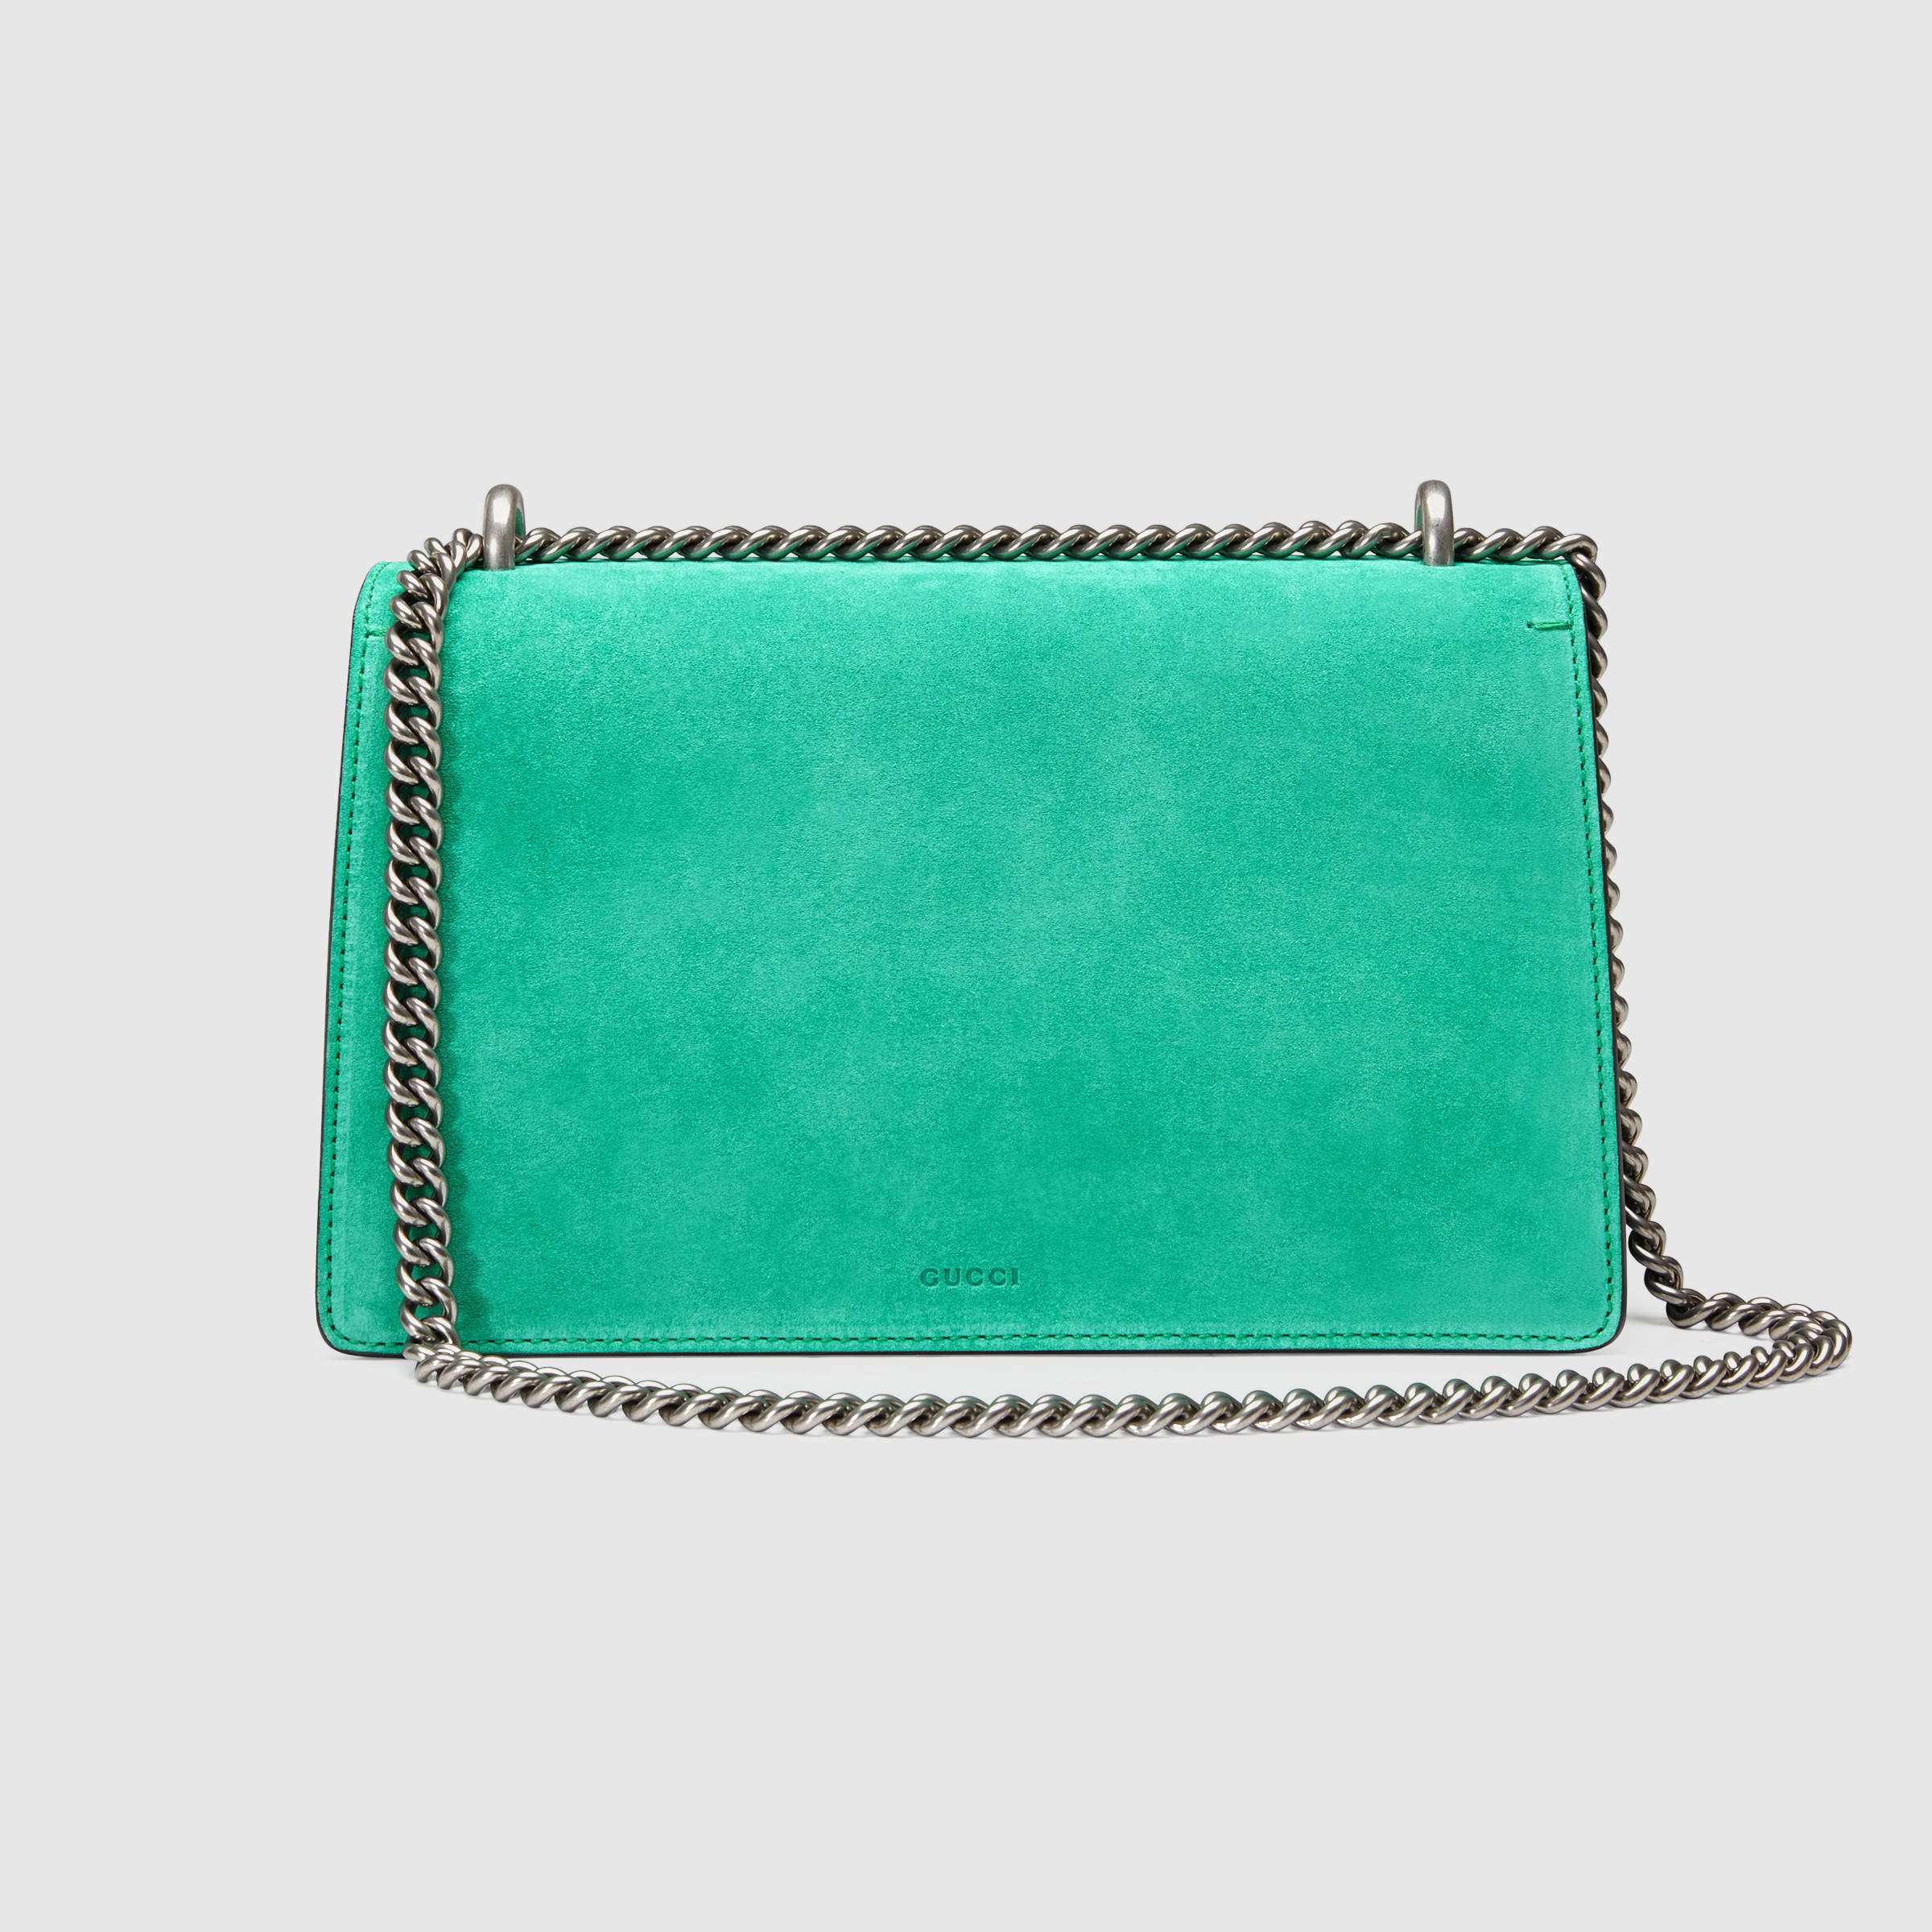 Lyst - Gucci Dionysus Suede Shoulder Bag in Green